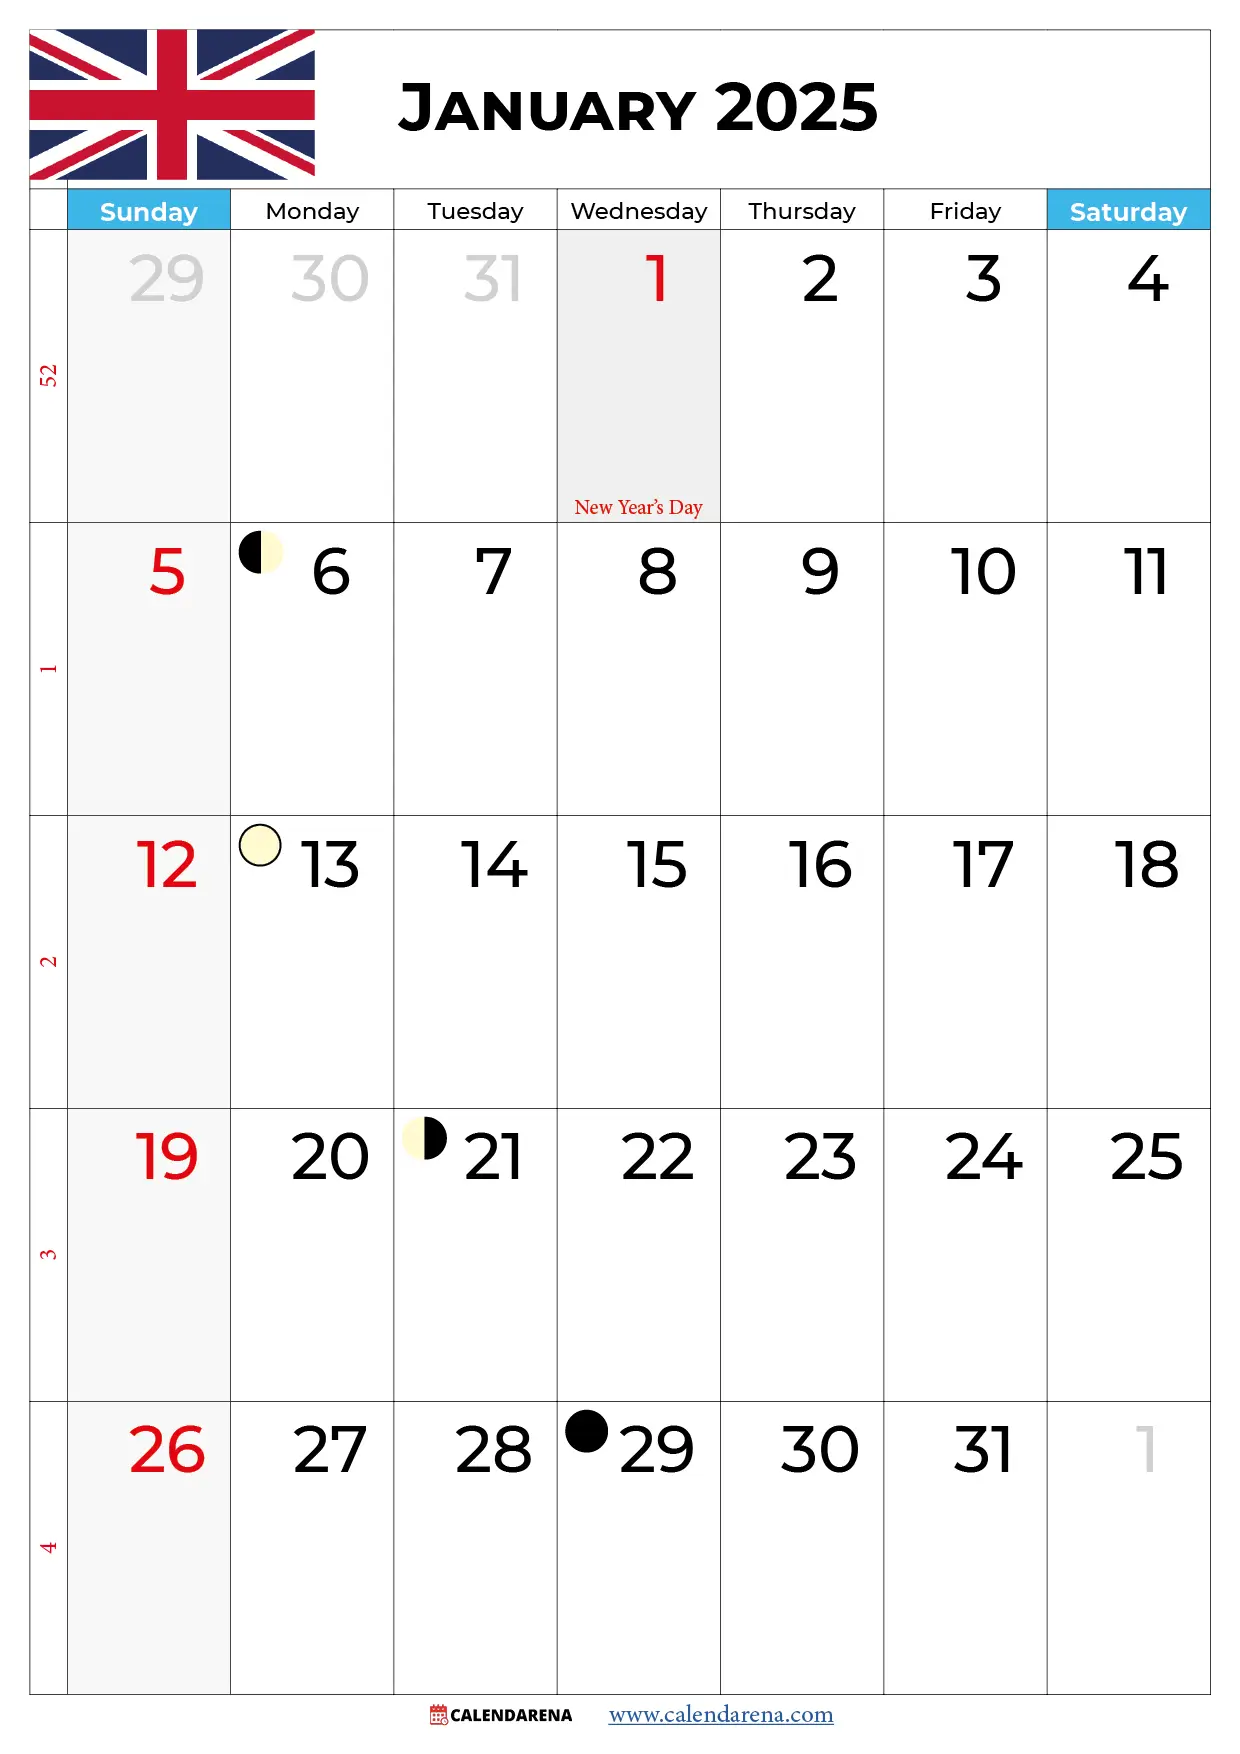 calendar january 2025 uk